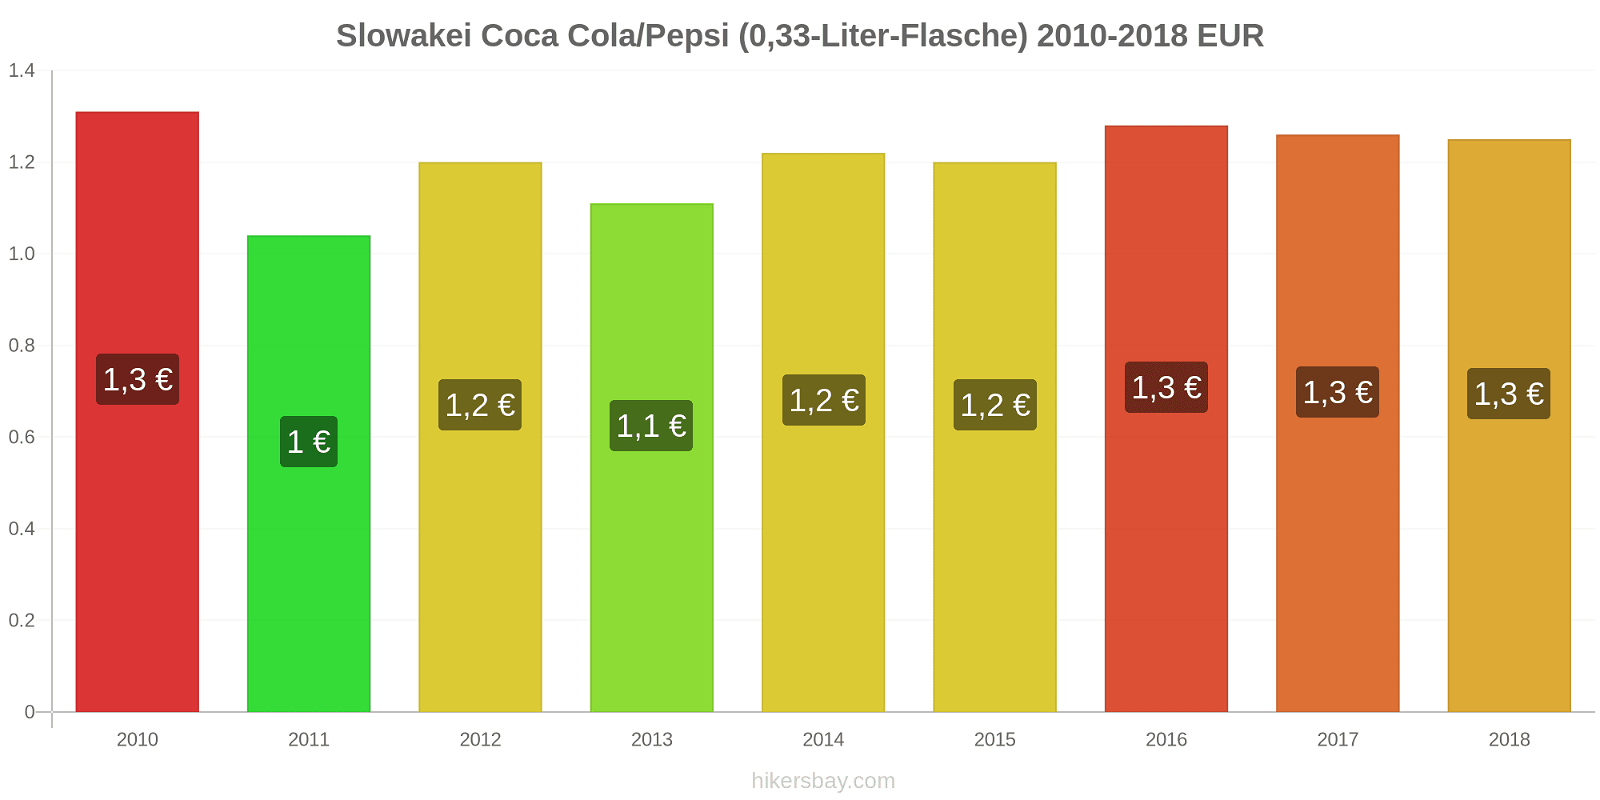 Slowakei Preisänderungen Coke/Pepsi (0,33-Liter-Flasche) hikersbay.com